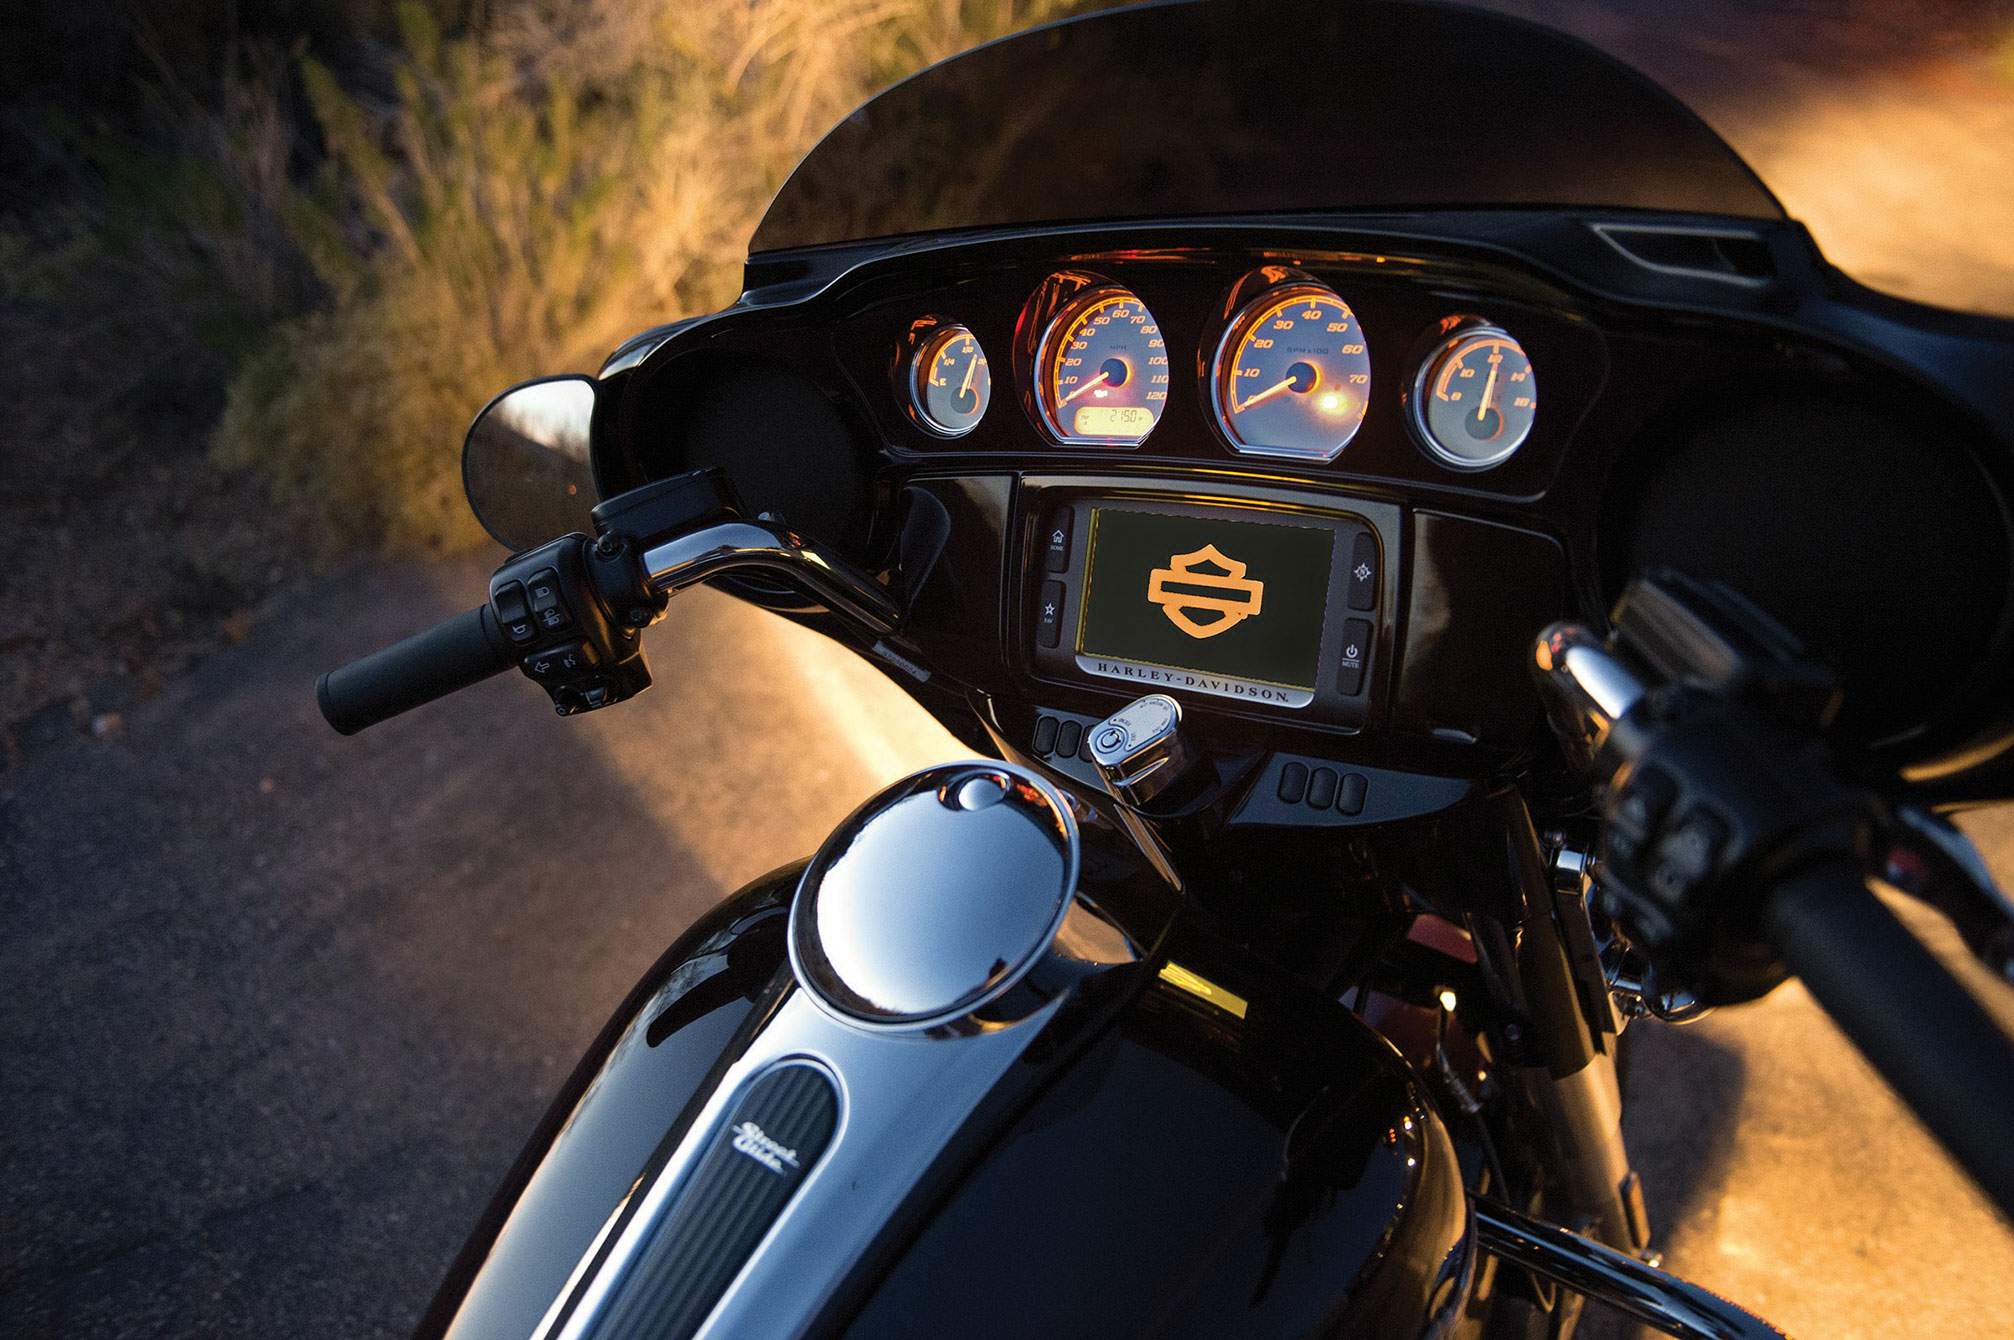 Мотоцикл Harley Davidson Special 2014 фото